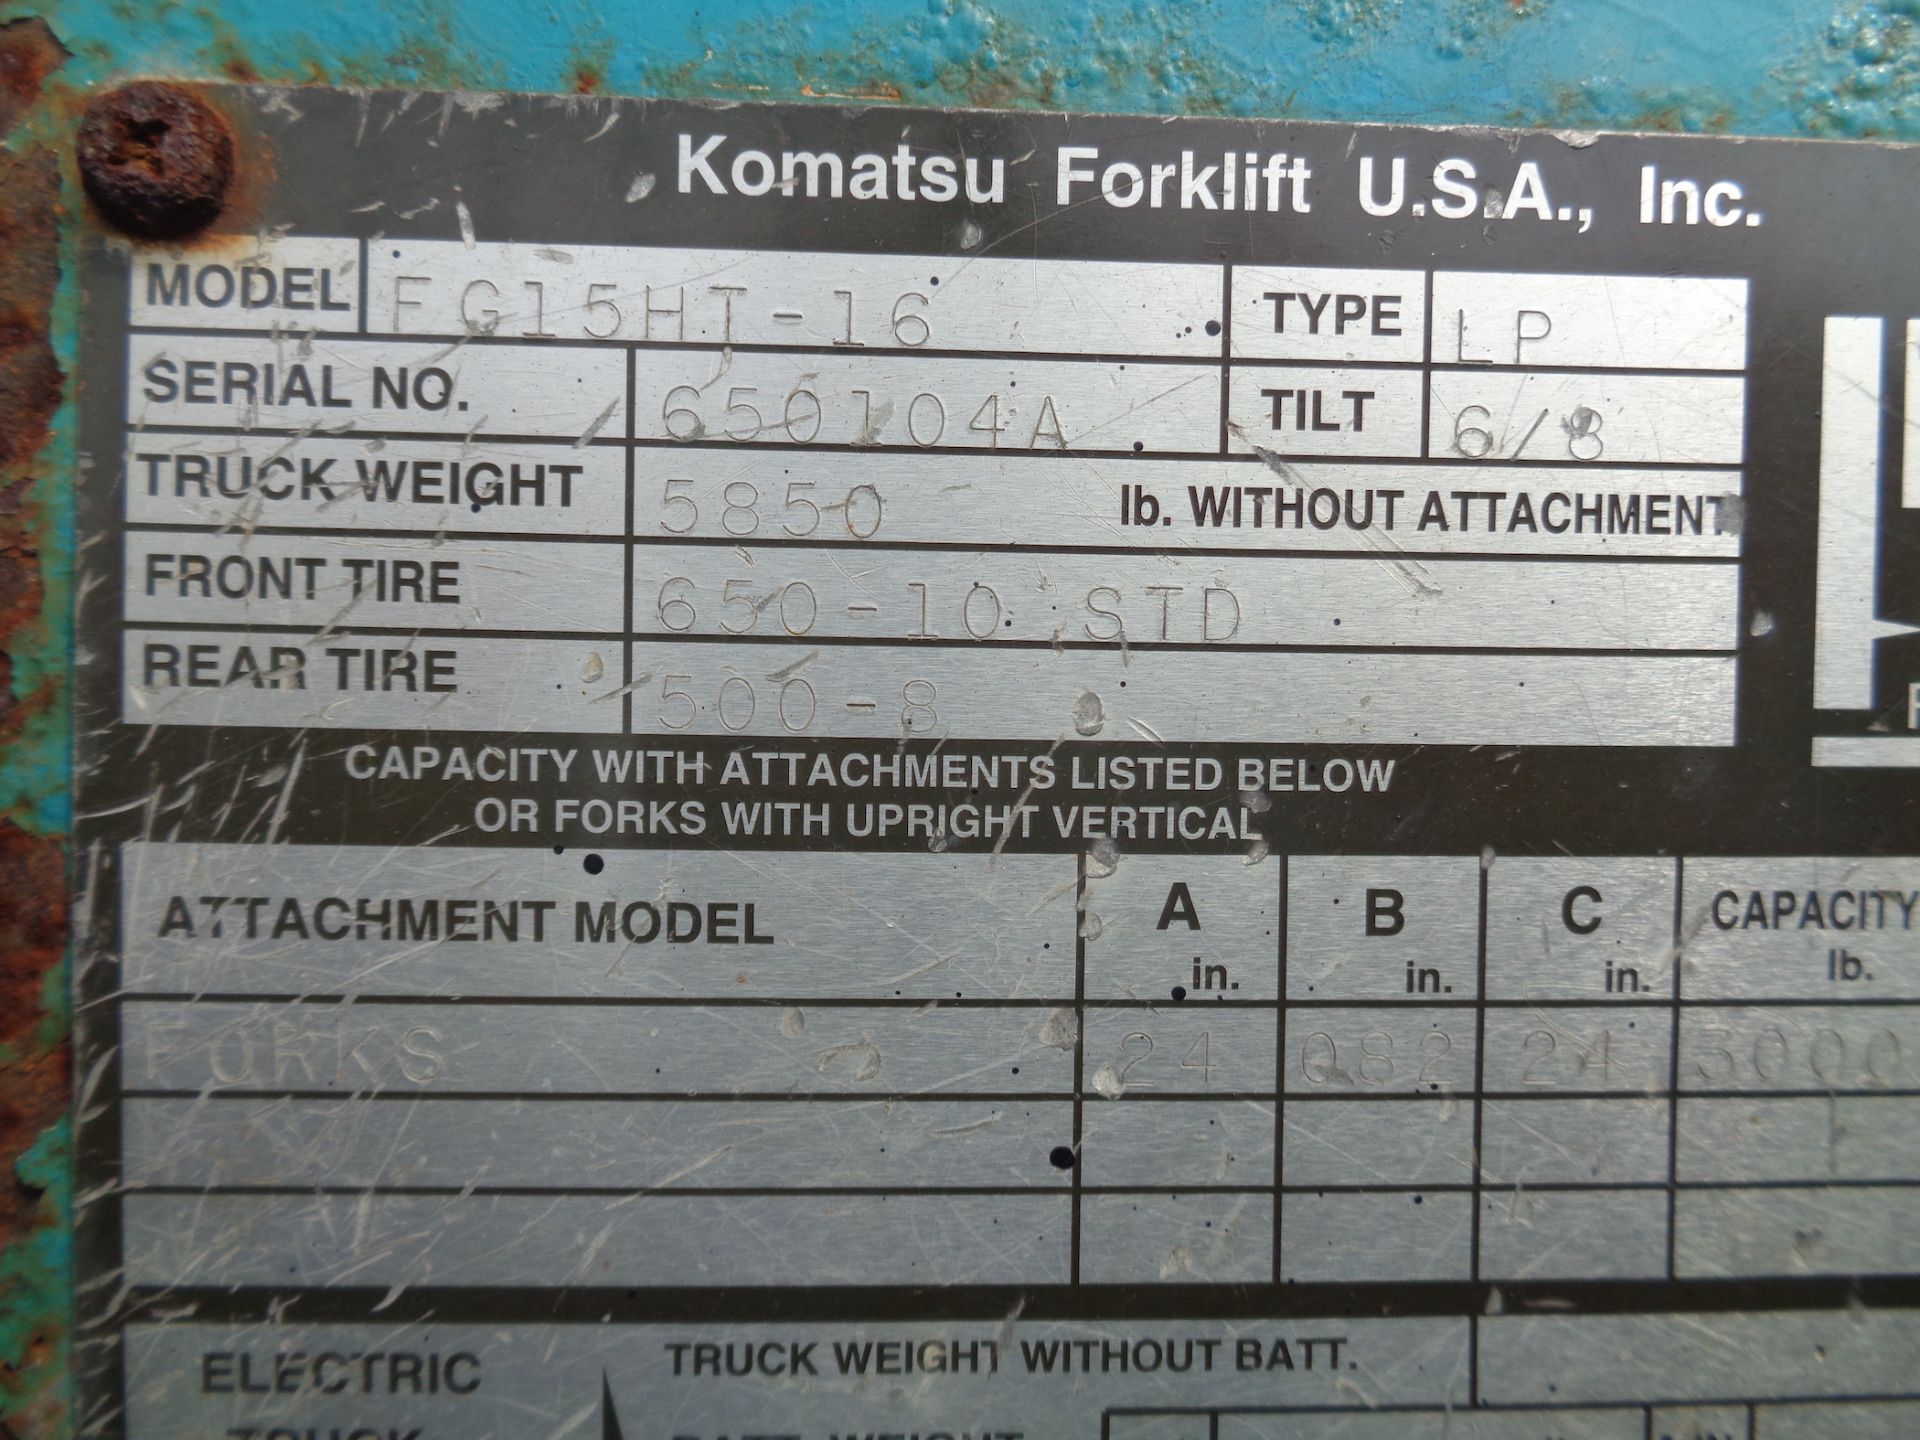 Komatsu FG15HT-16 3,000 lb Forklift - Image 5 of 5